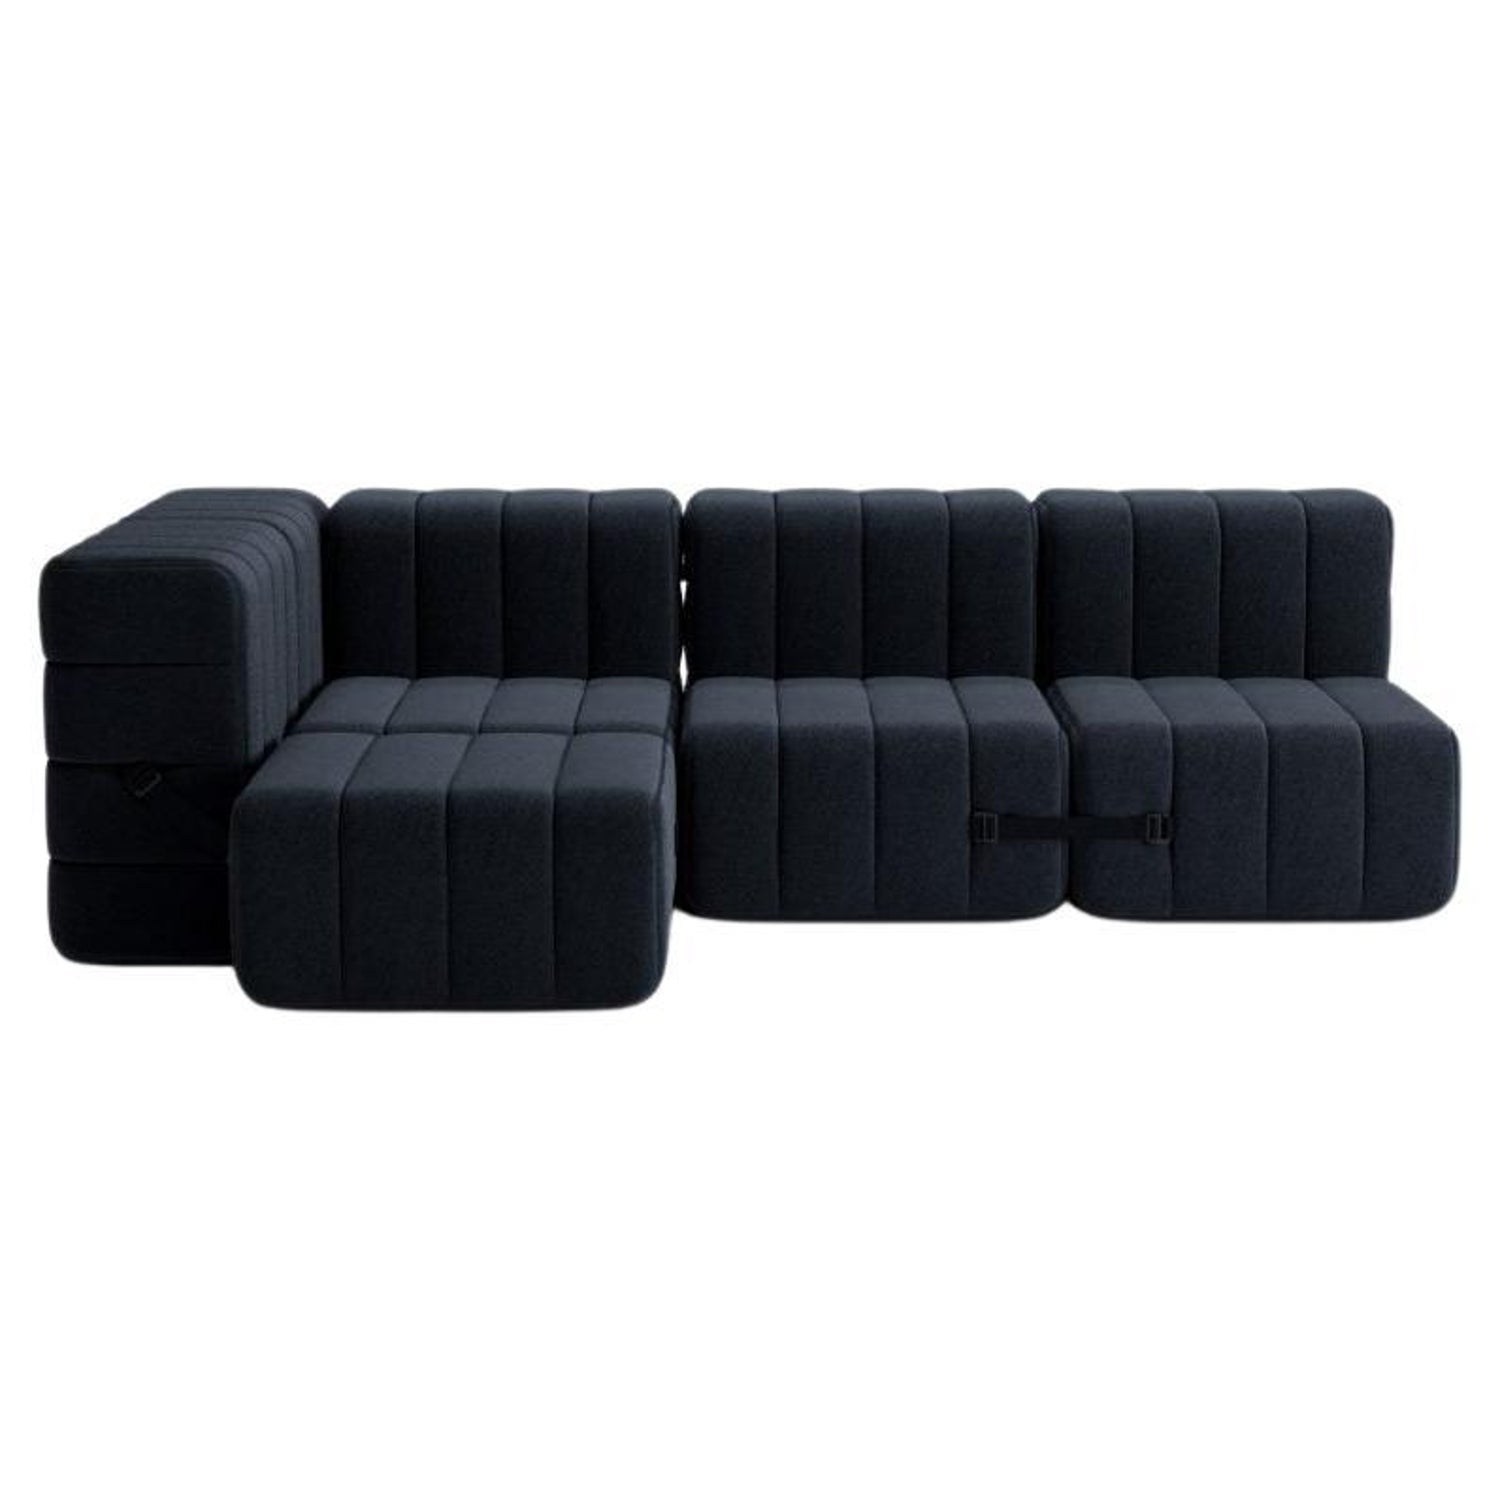 Curt-Set 15 - e.g. Flexible U-shaped sofa - Jet - 9806 (Dark grey) For Sale  at 1stDibs